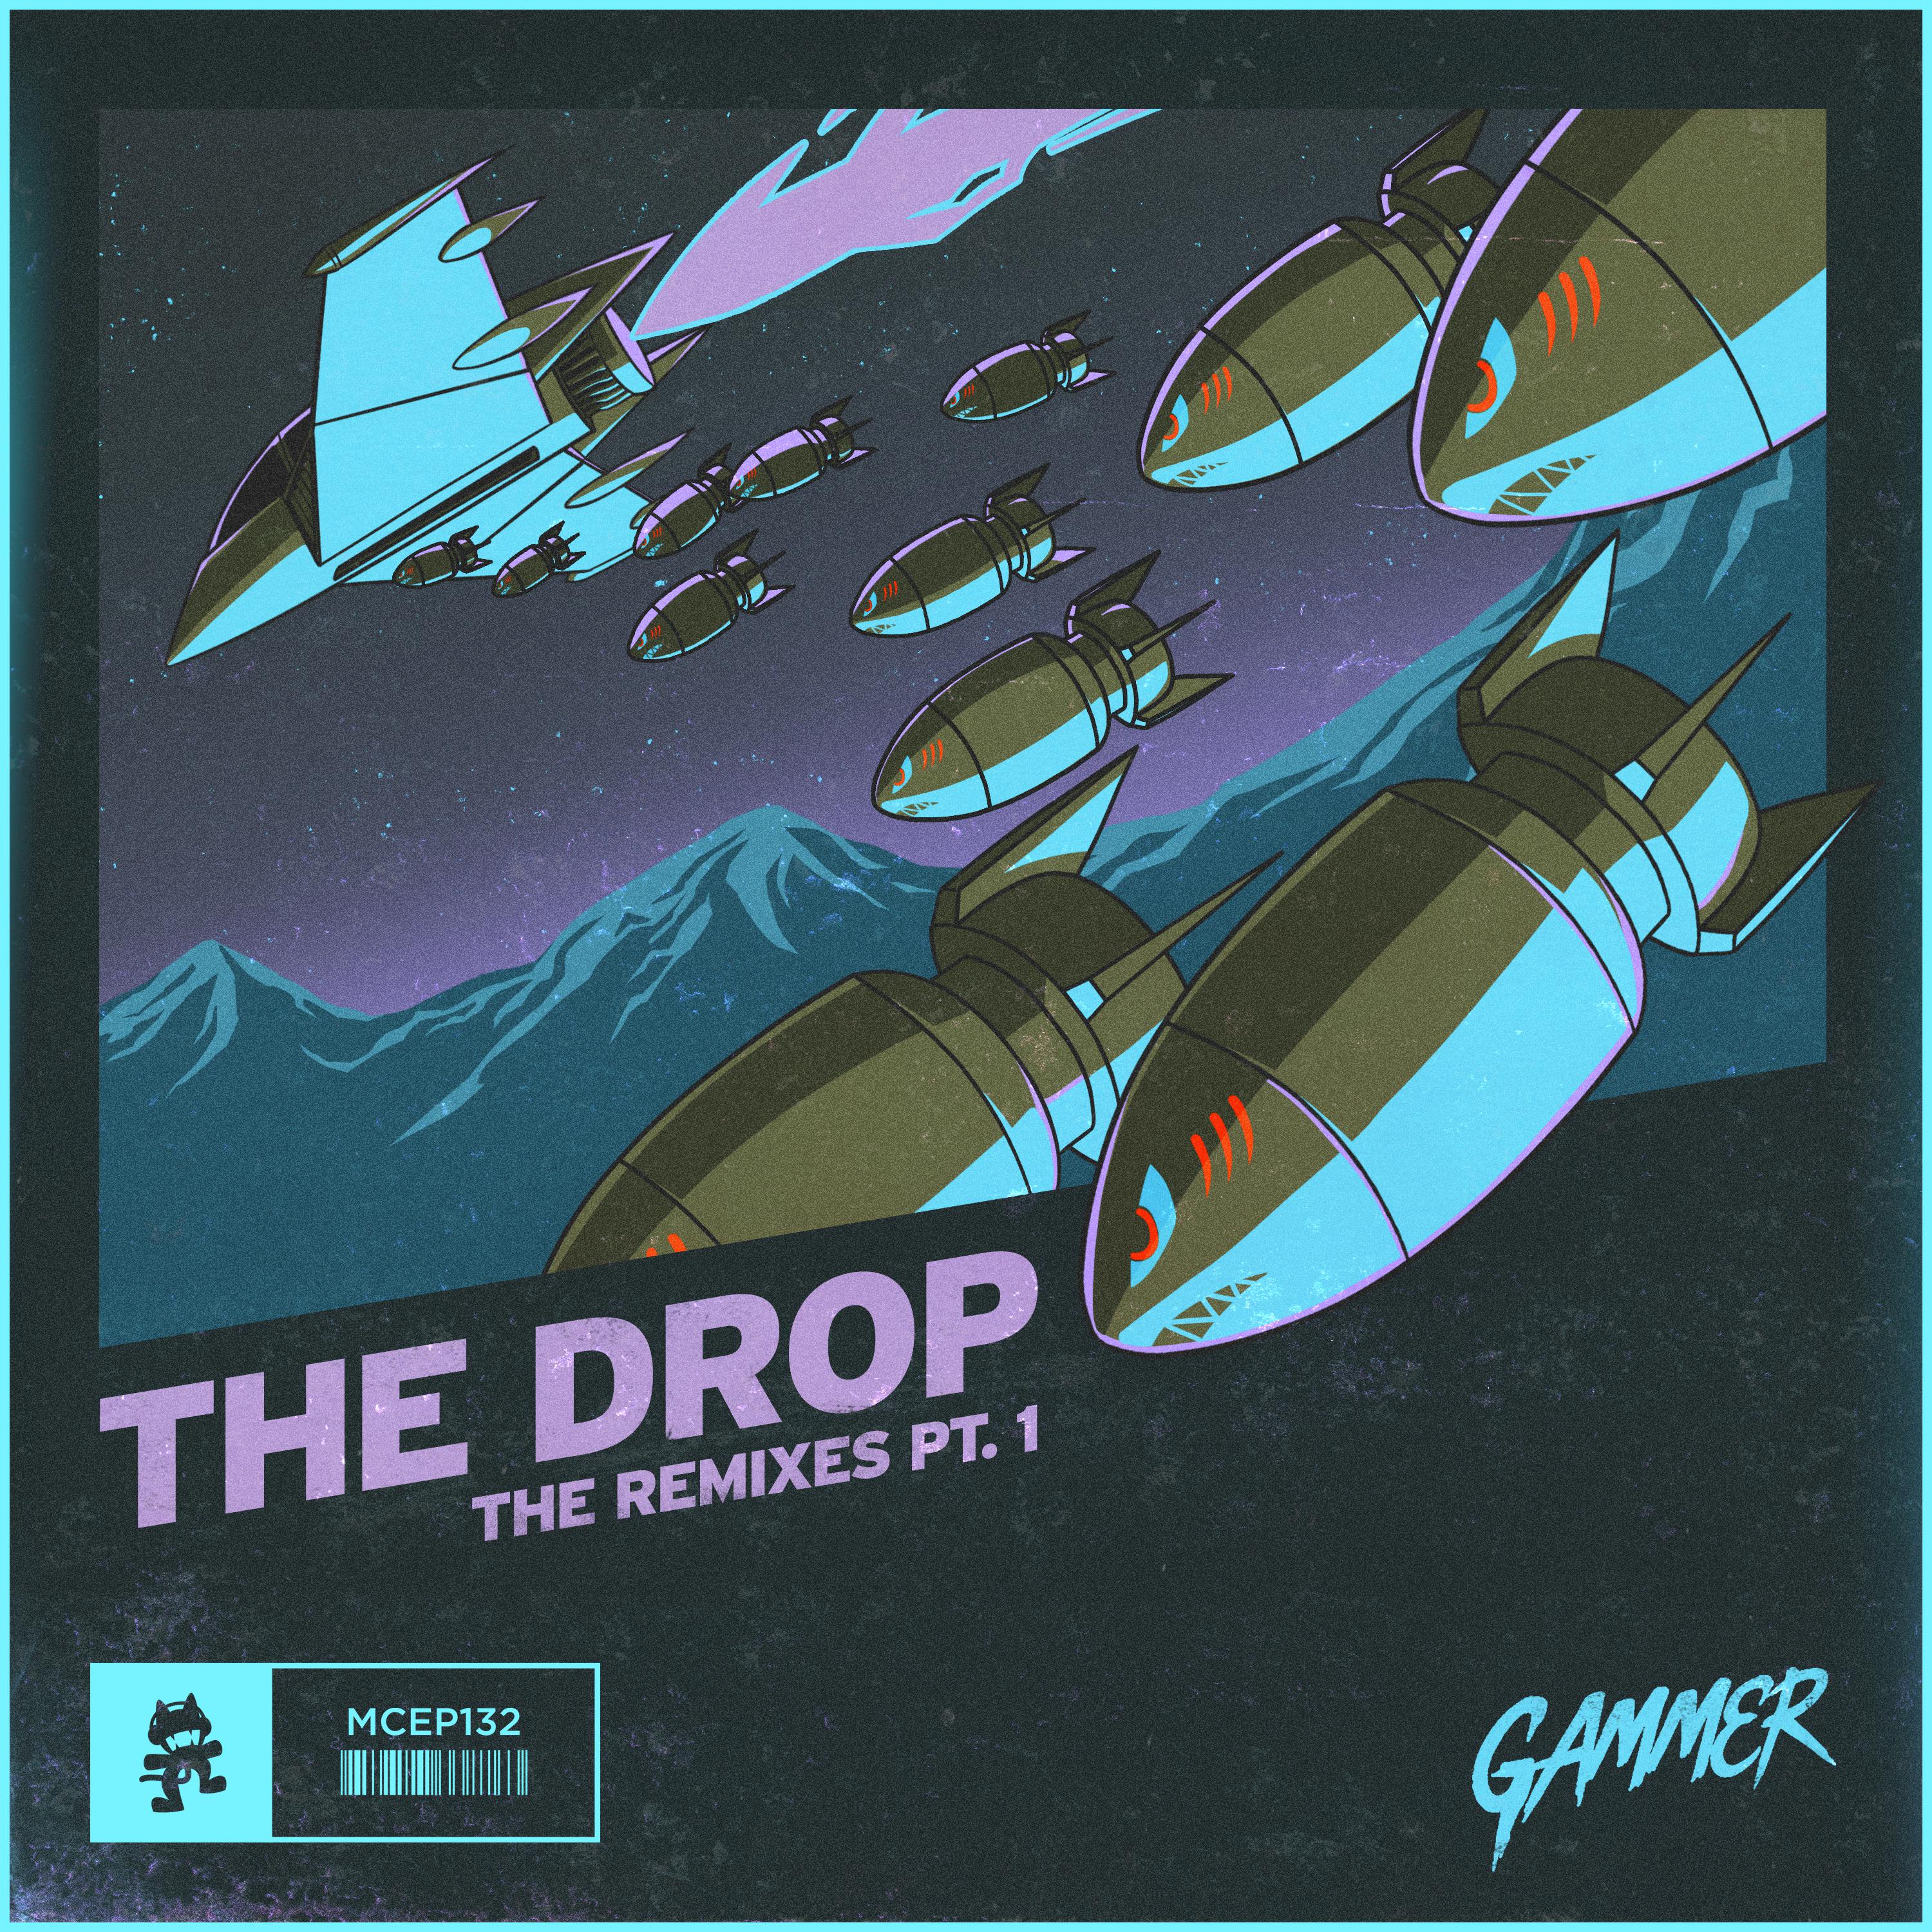 THE DROP (Remixes Pt.1)